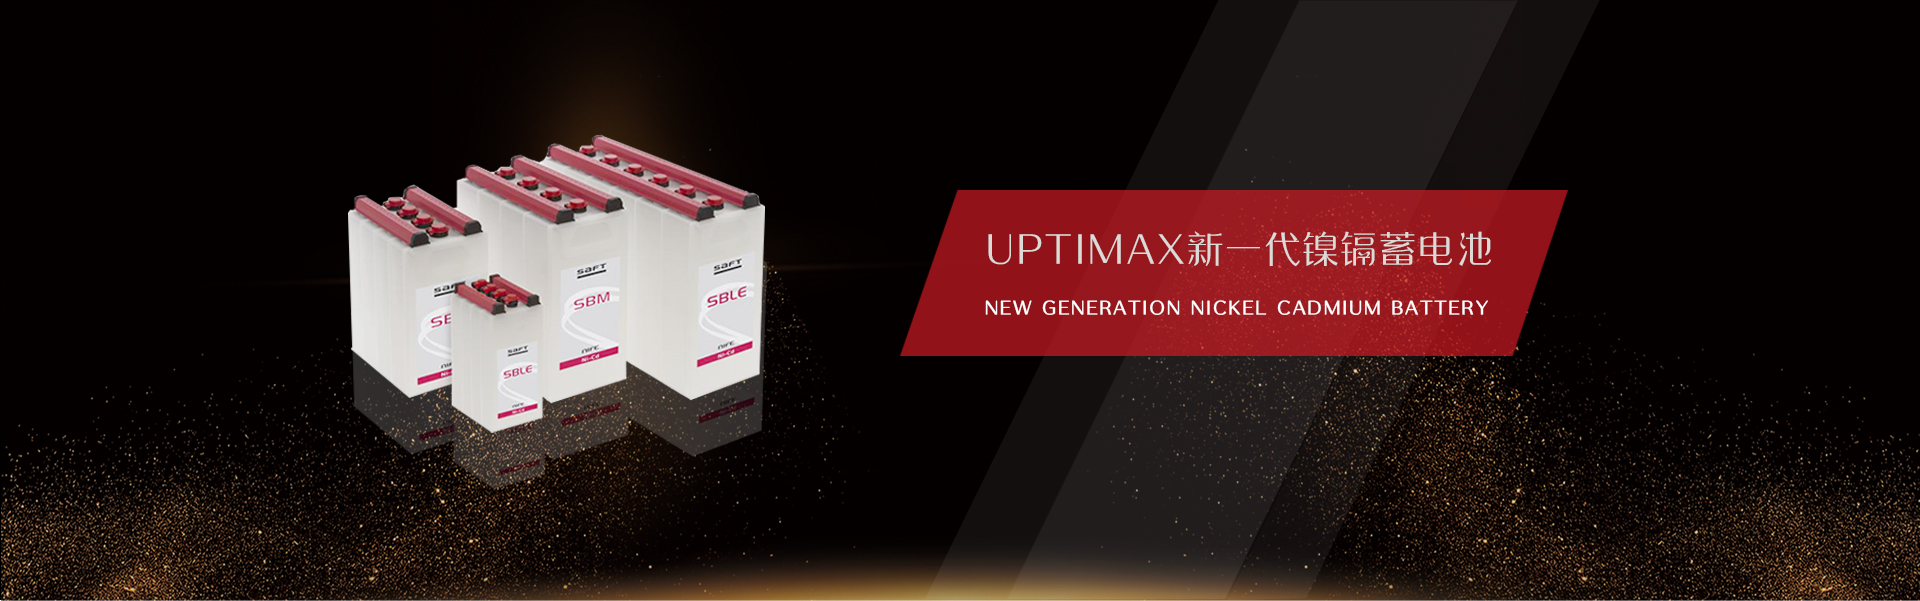 Uptimax新一代鎳鎘蓄電池